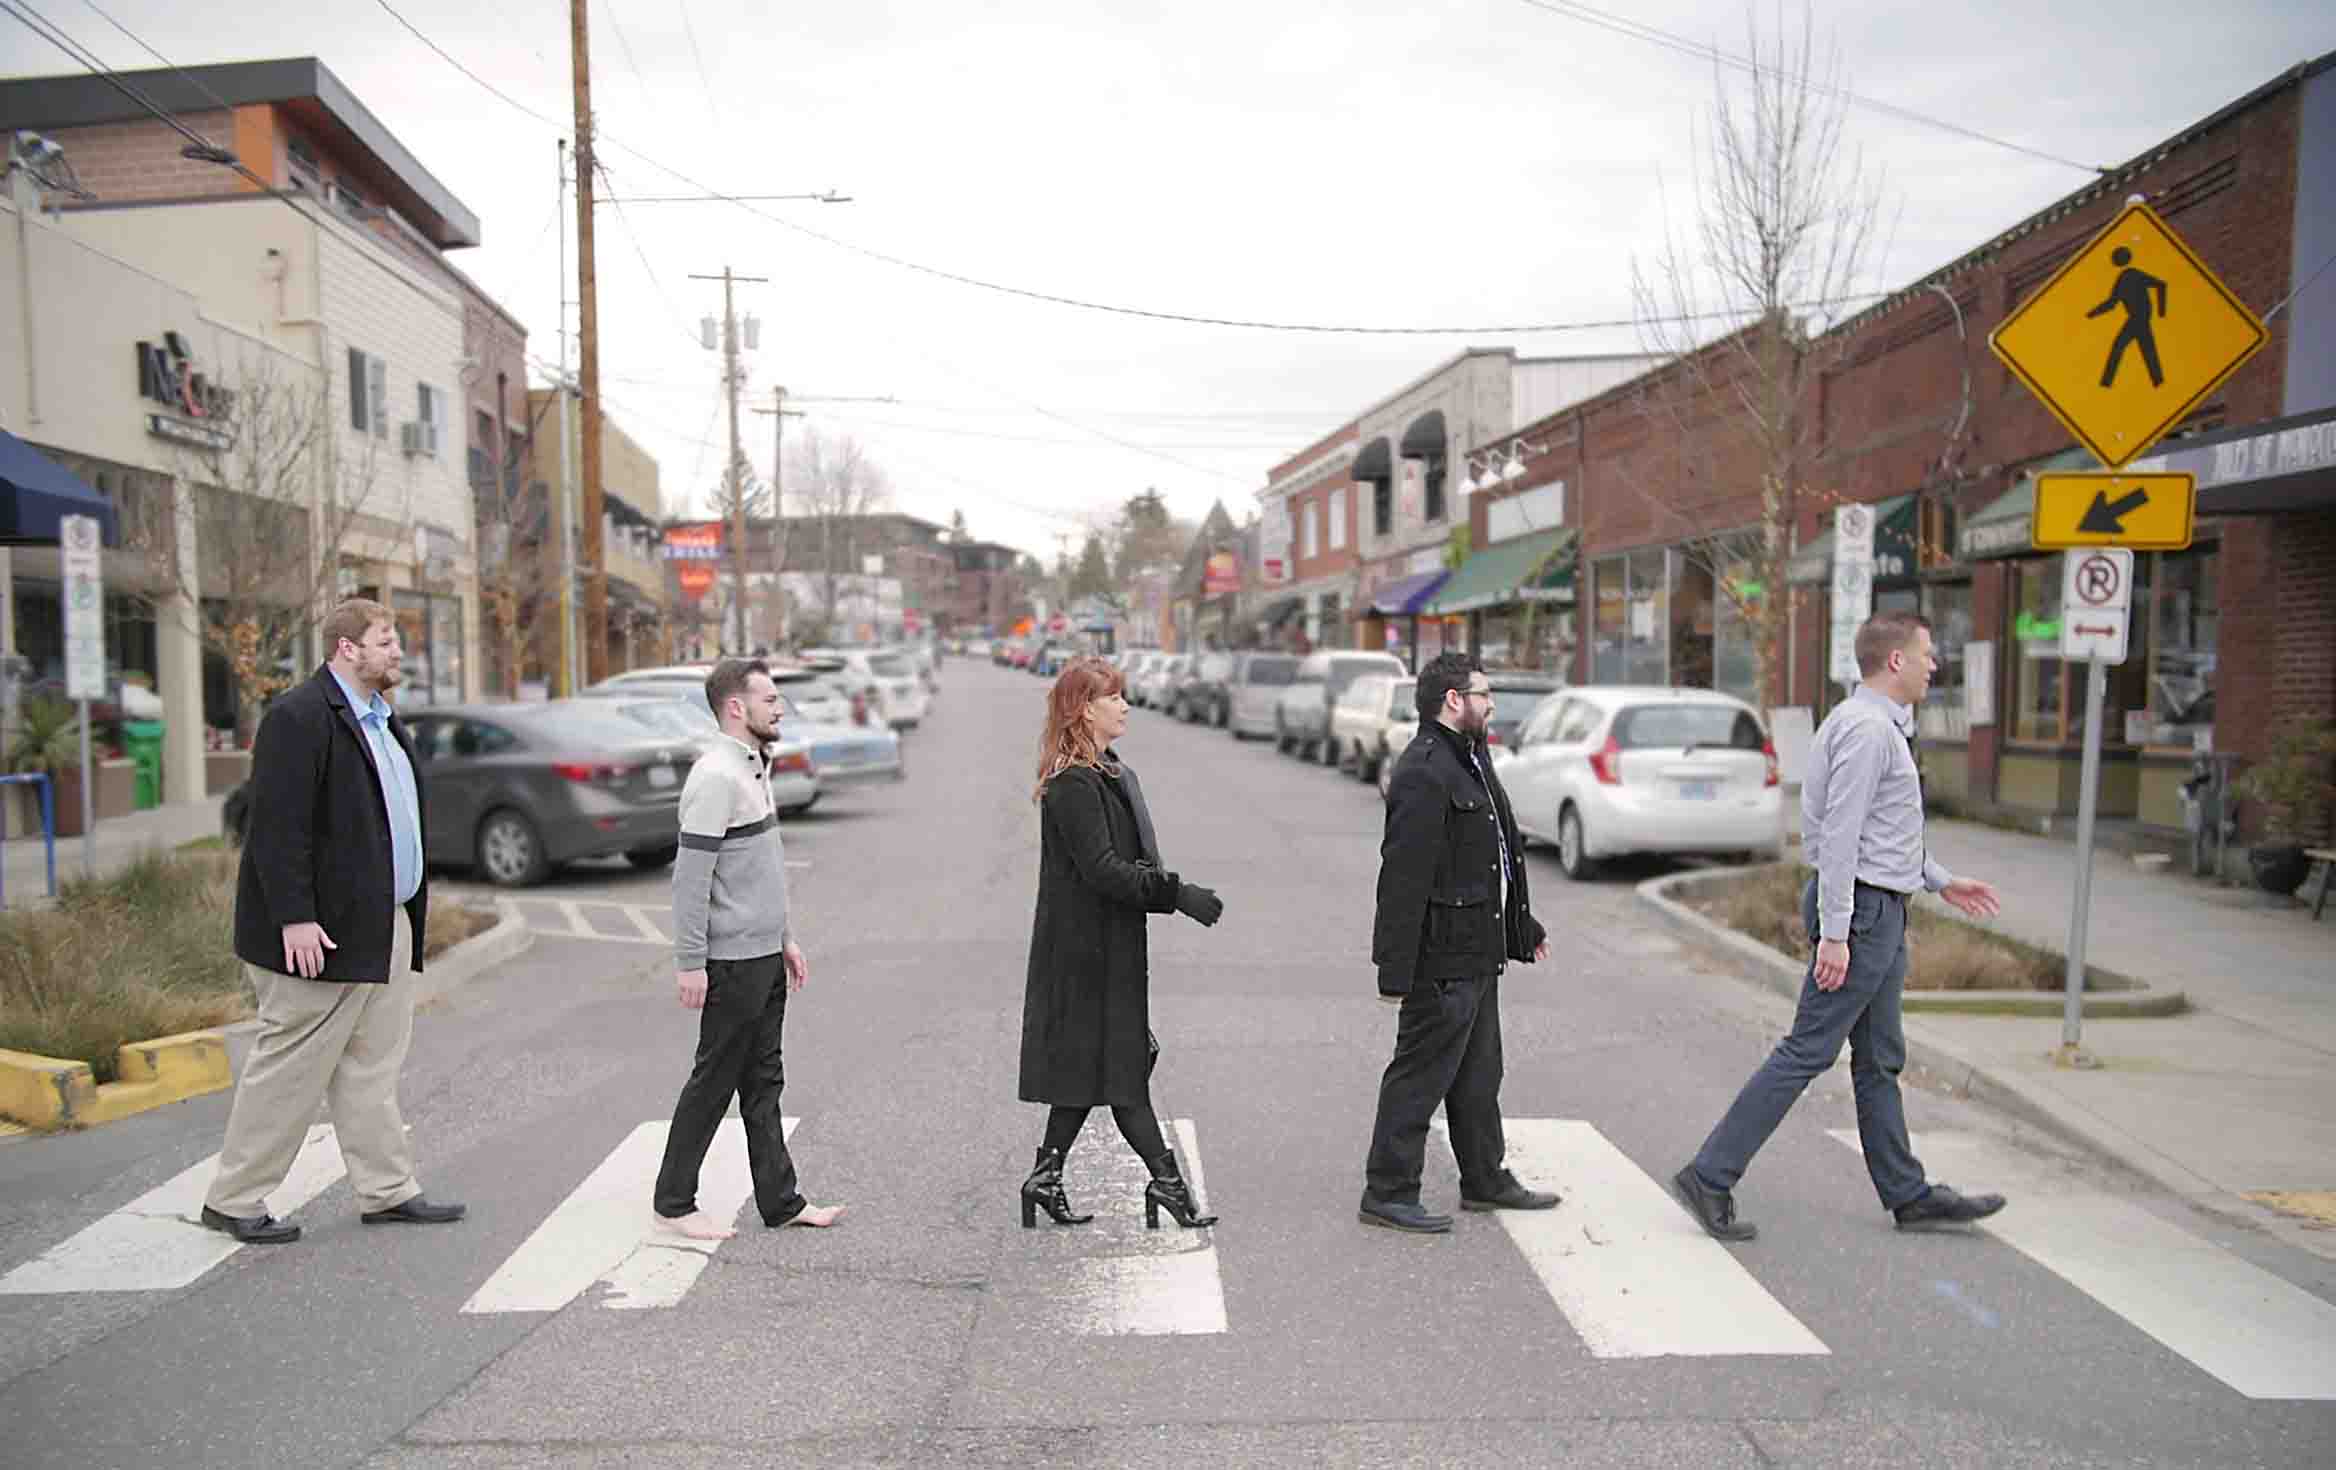 Multnomah Village branch staff in crosswalk like the beatles abby road album